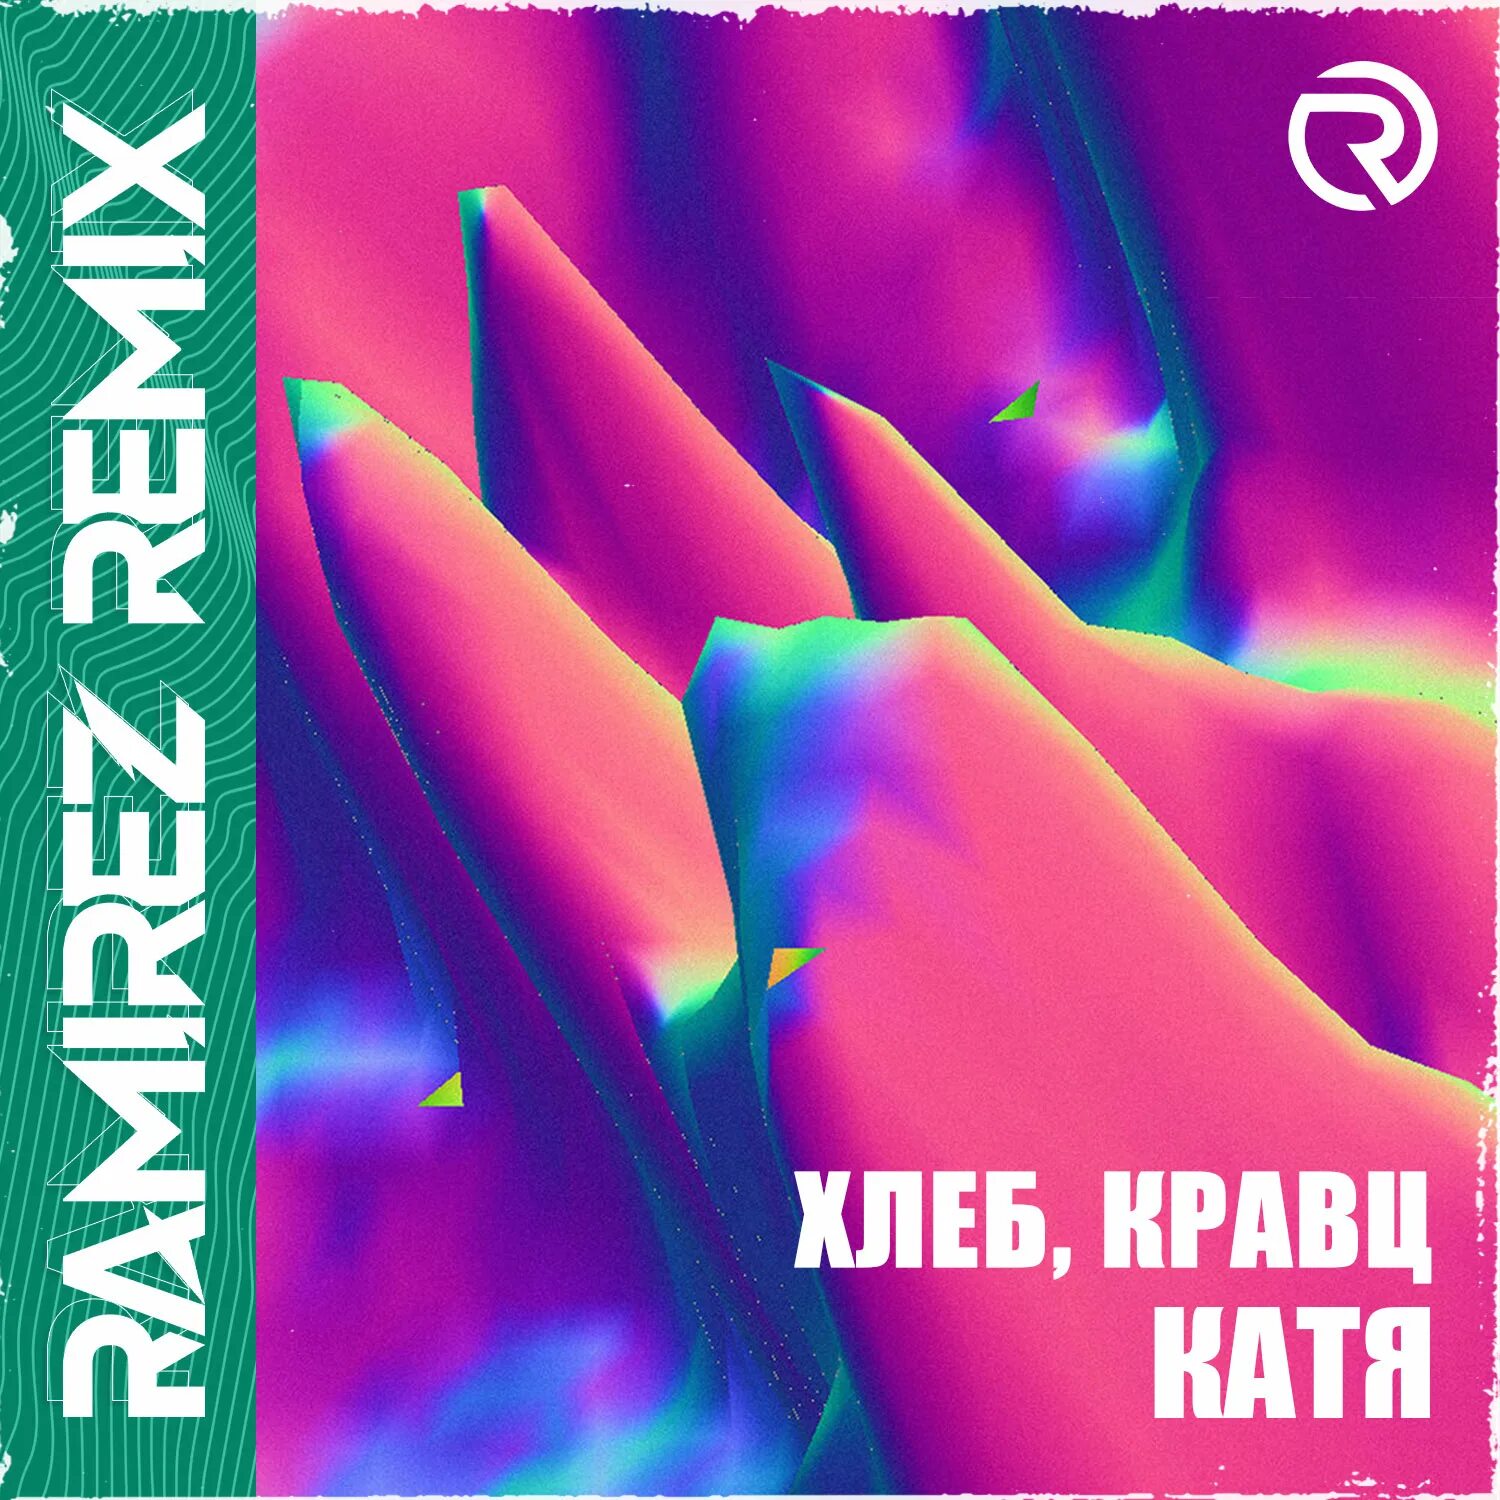 Ramirez Remix. Хлеб - Катя (feat. Кравц) Live @ Авторадио. Хлеб - Катя ( feat. Кравц ) ( mood Video ). @Хлеб - Катя feat. @Кравц (Live @ радио Energy).